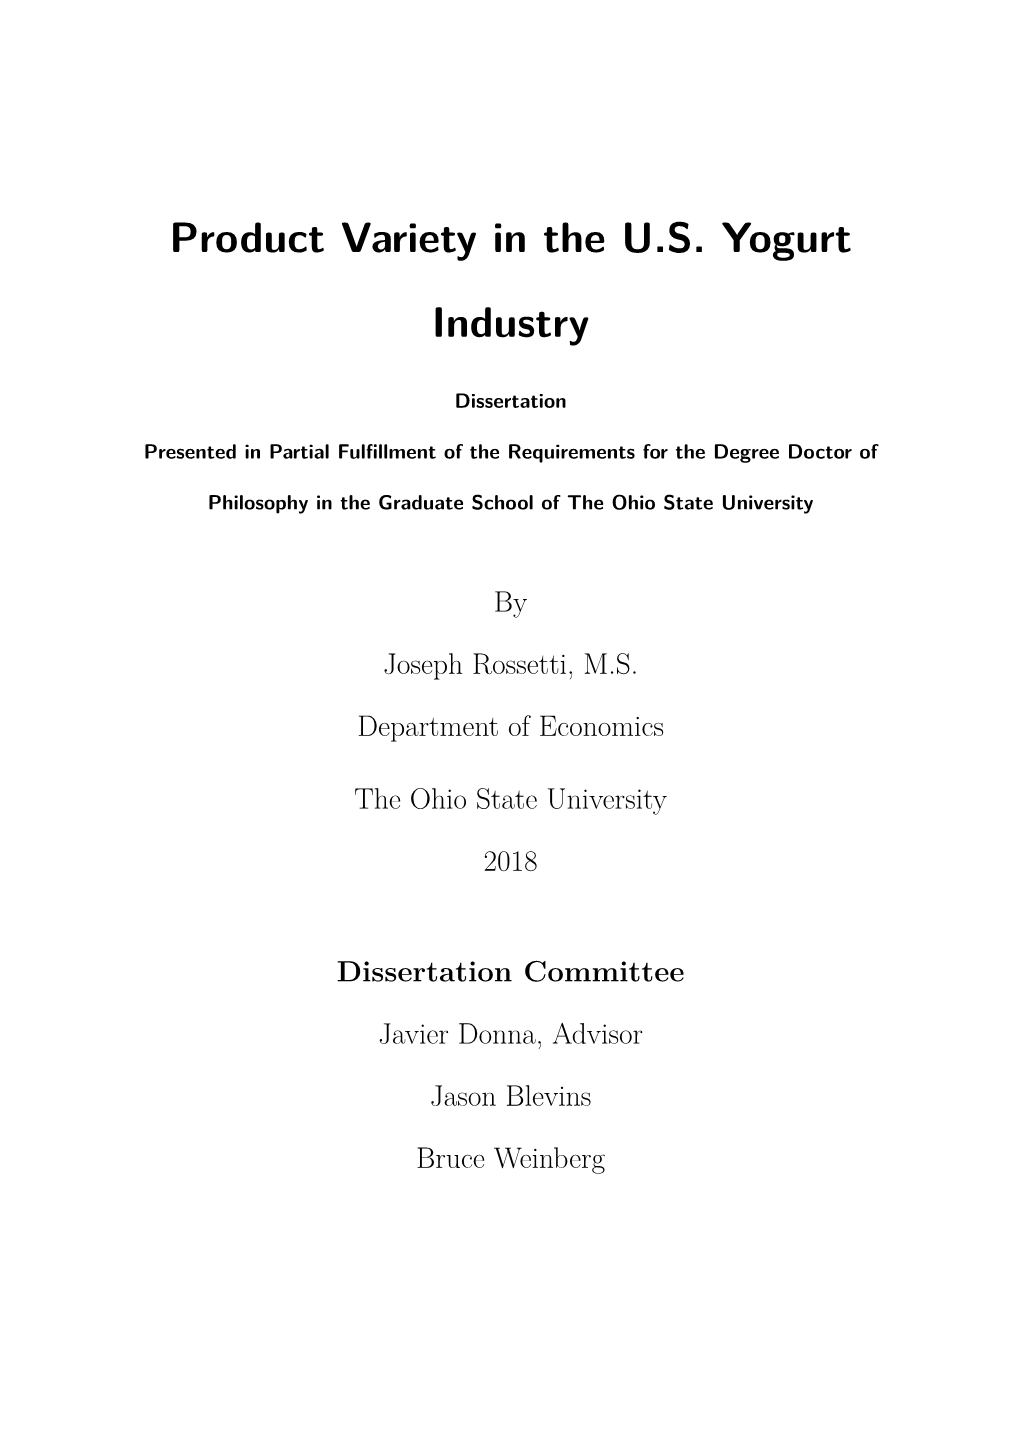 Product Variety in the U.S. Yogurt Industry